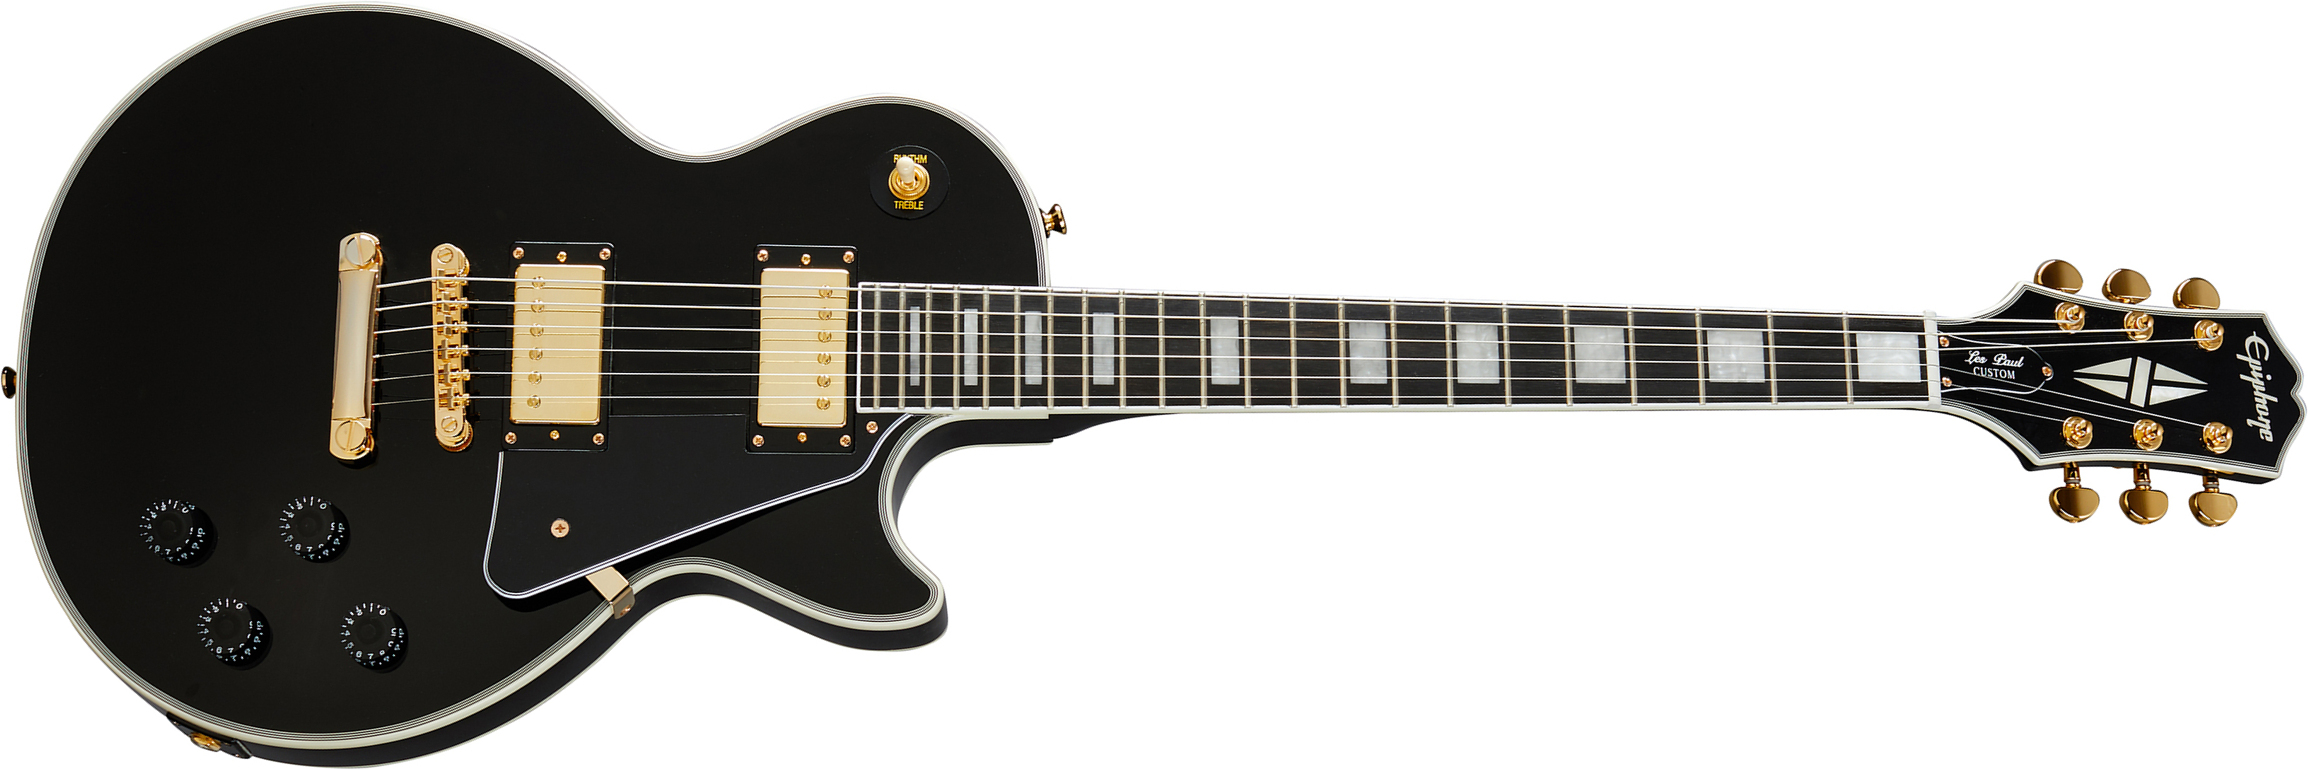 Epiphone Les Paul Custom 2h Ht Eb - Ebony - Guitarra eléctrica de corte único. - Main picture